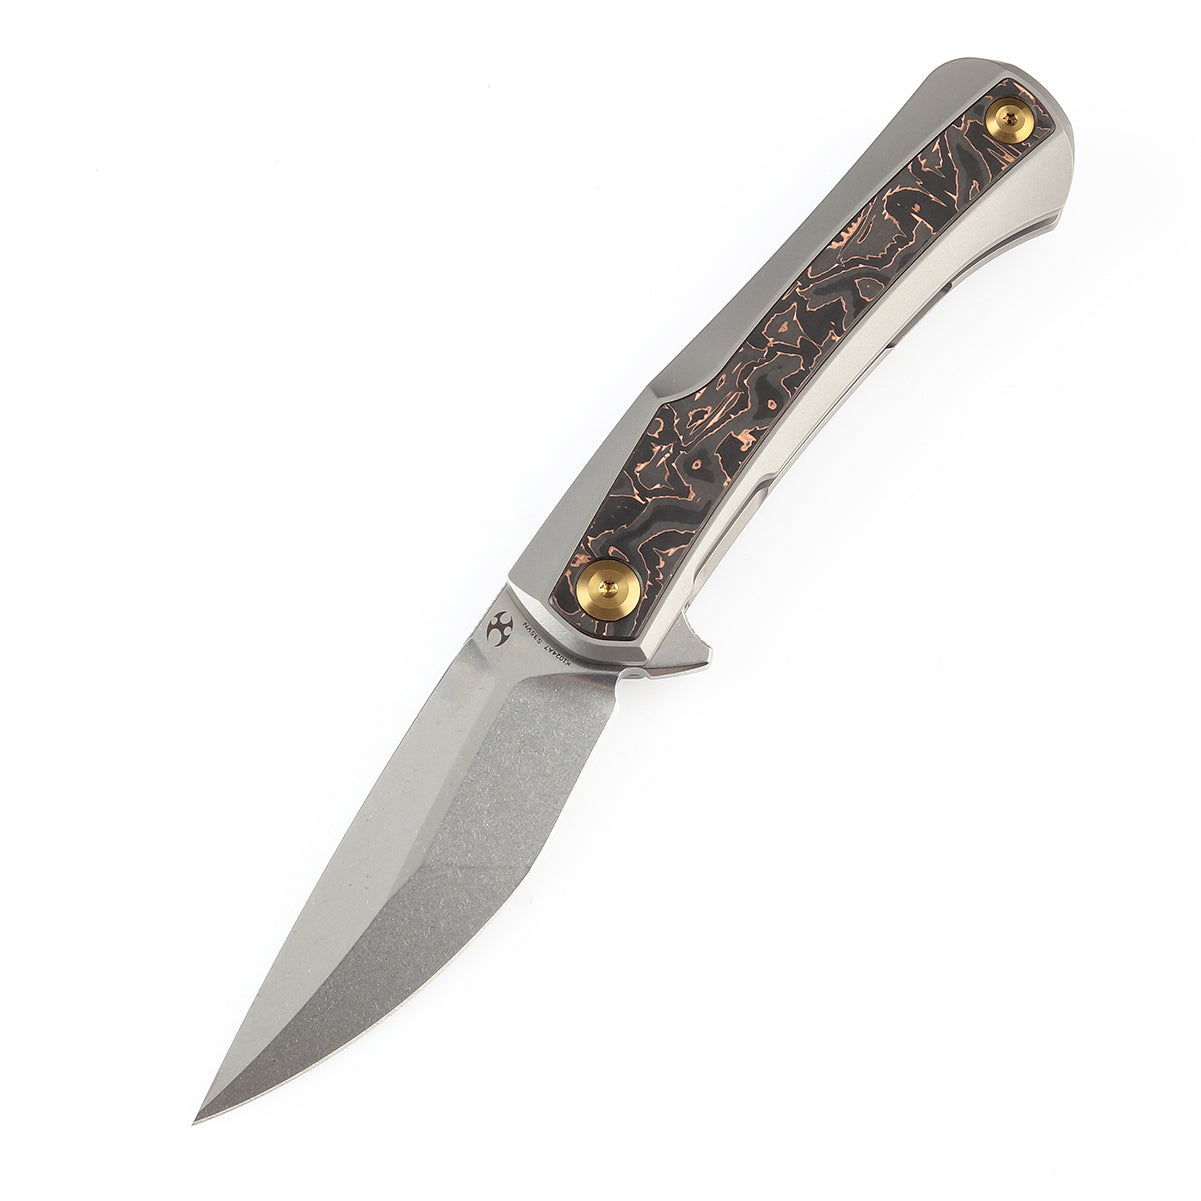 Kansept Kratos K1024A7 CPM-S35VN Blade Copper Carbon Fiber Handle Folding Knife